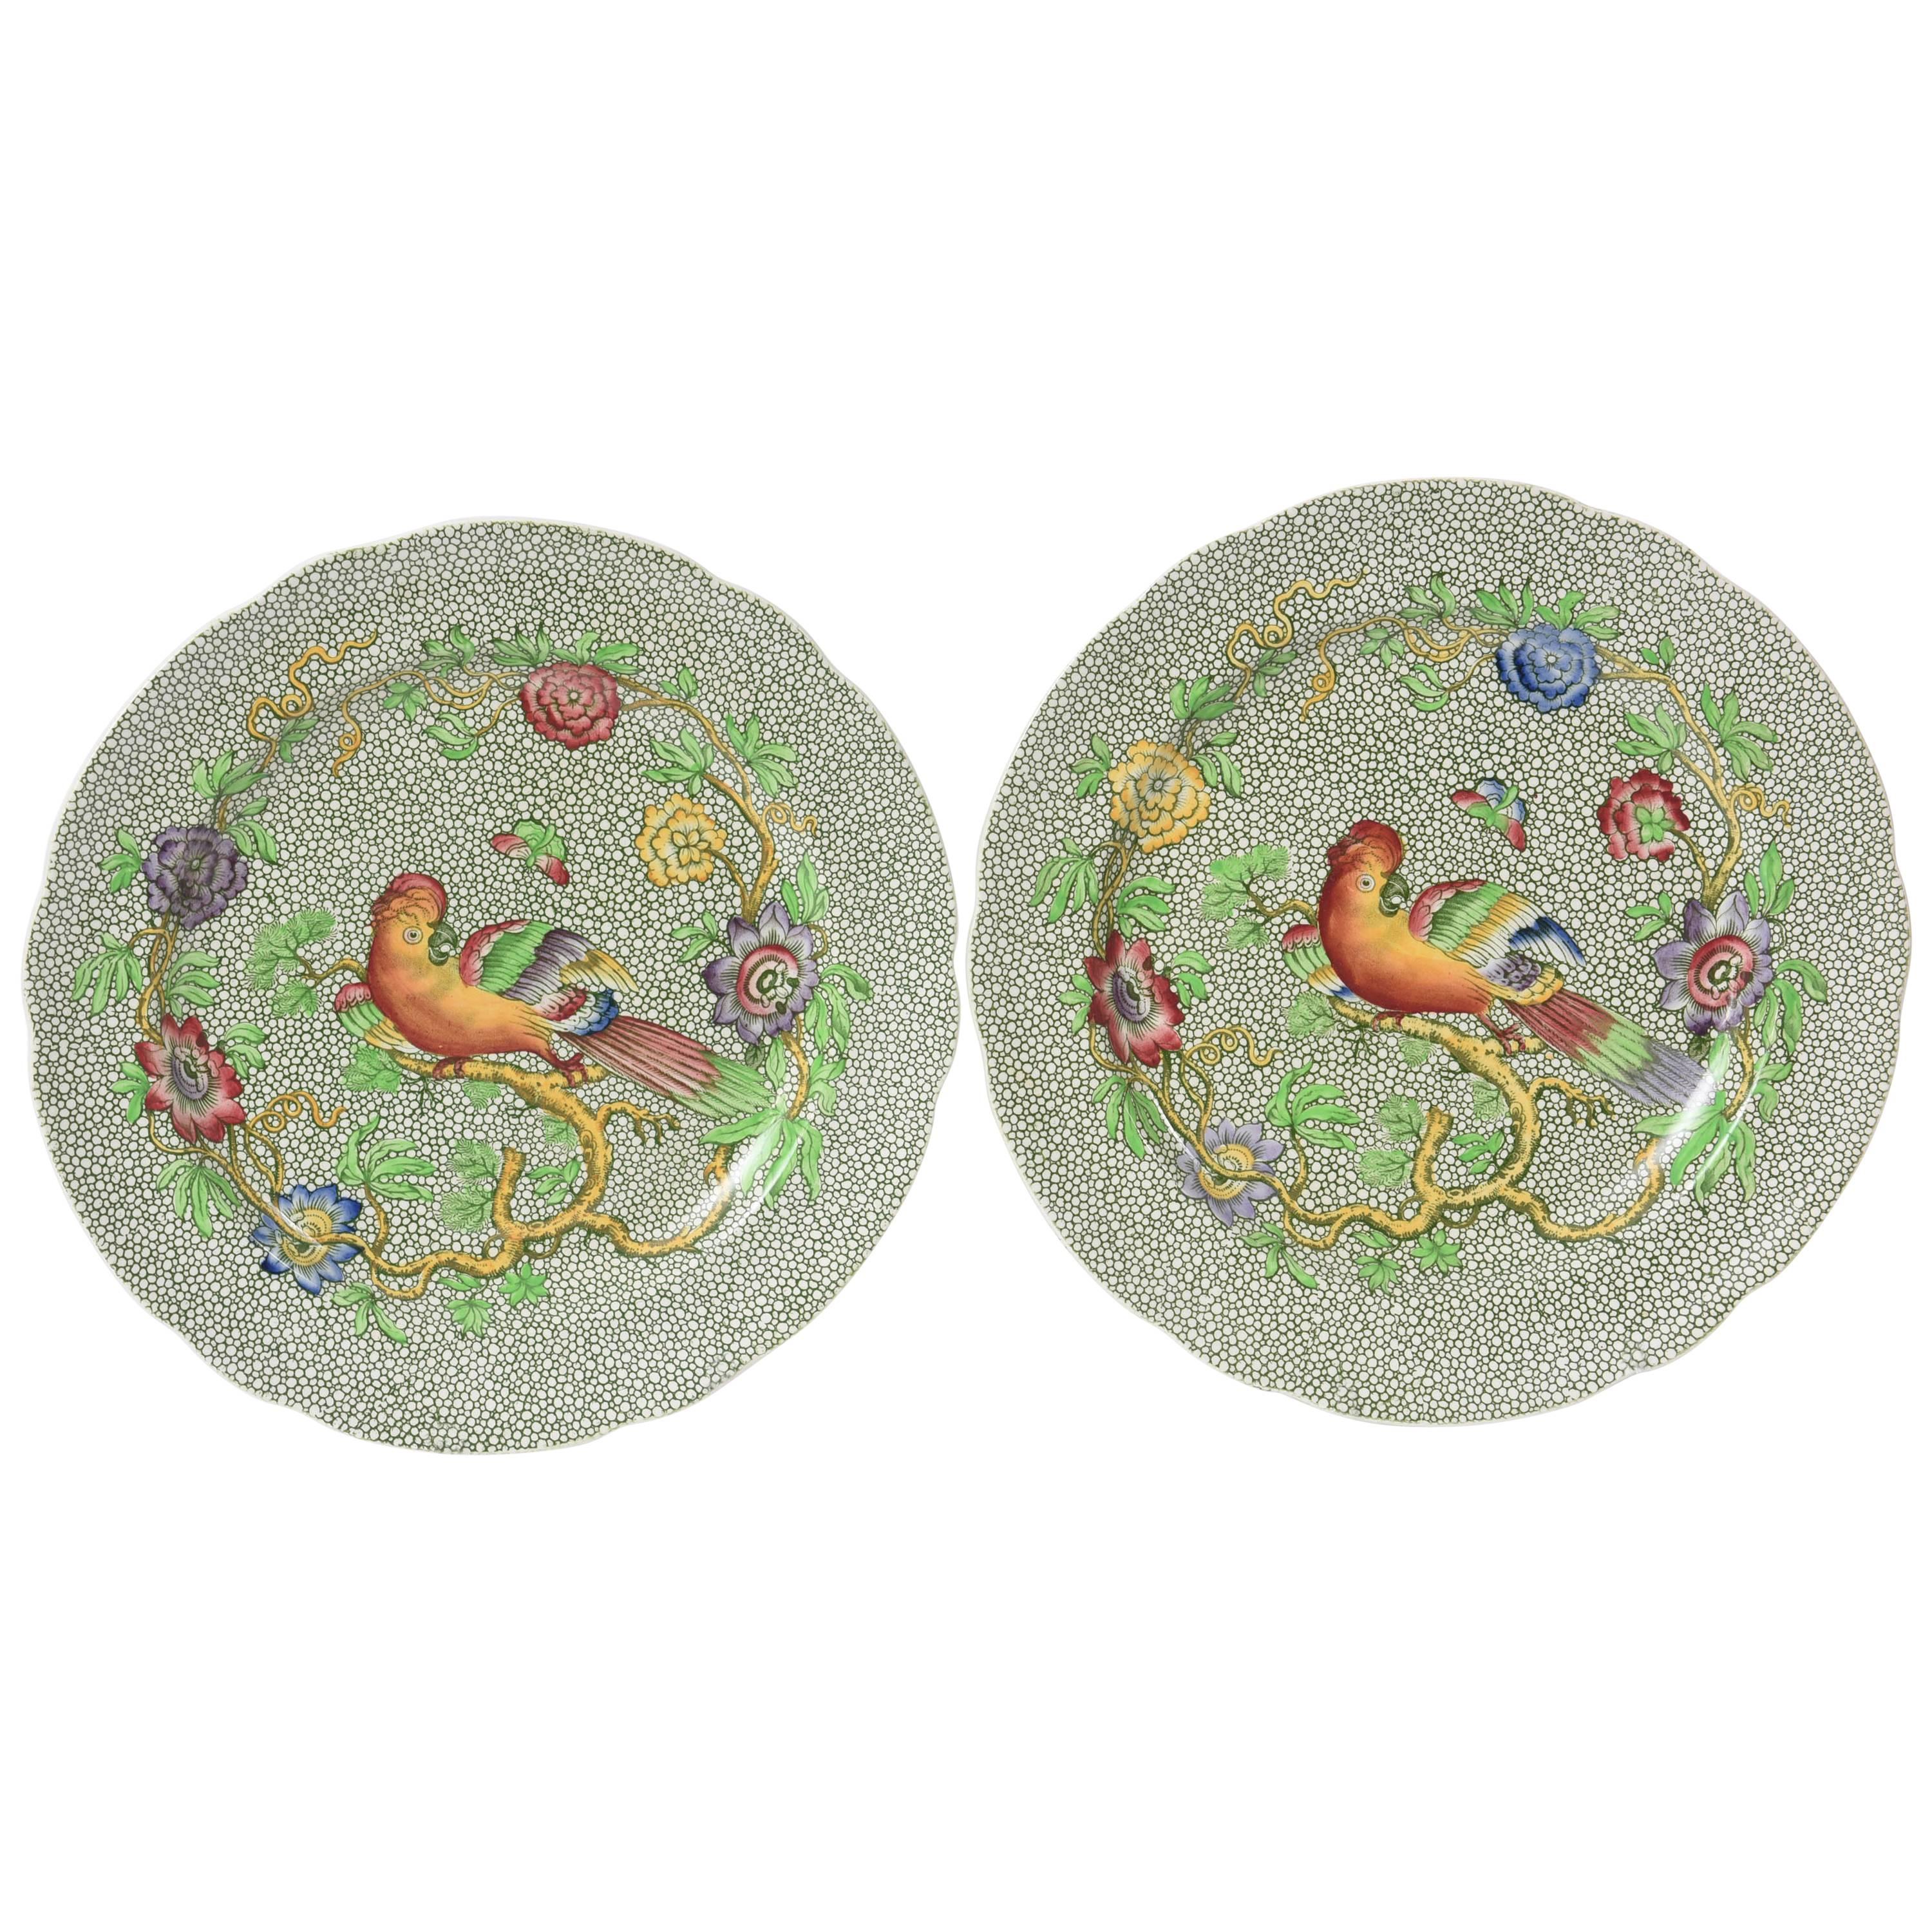 Antique Spode Plates, England "Parrot" Plates. Hand Colored